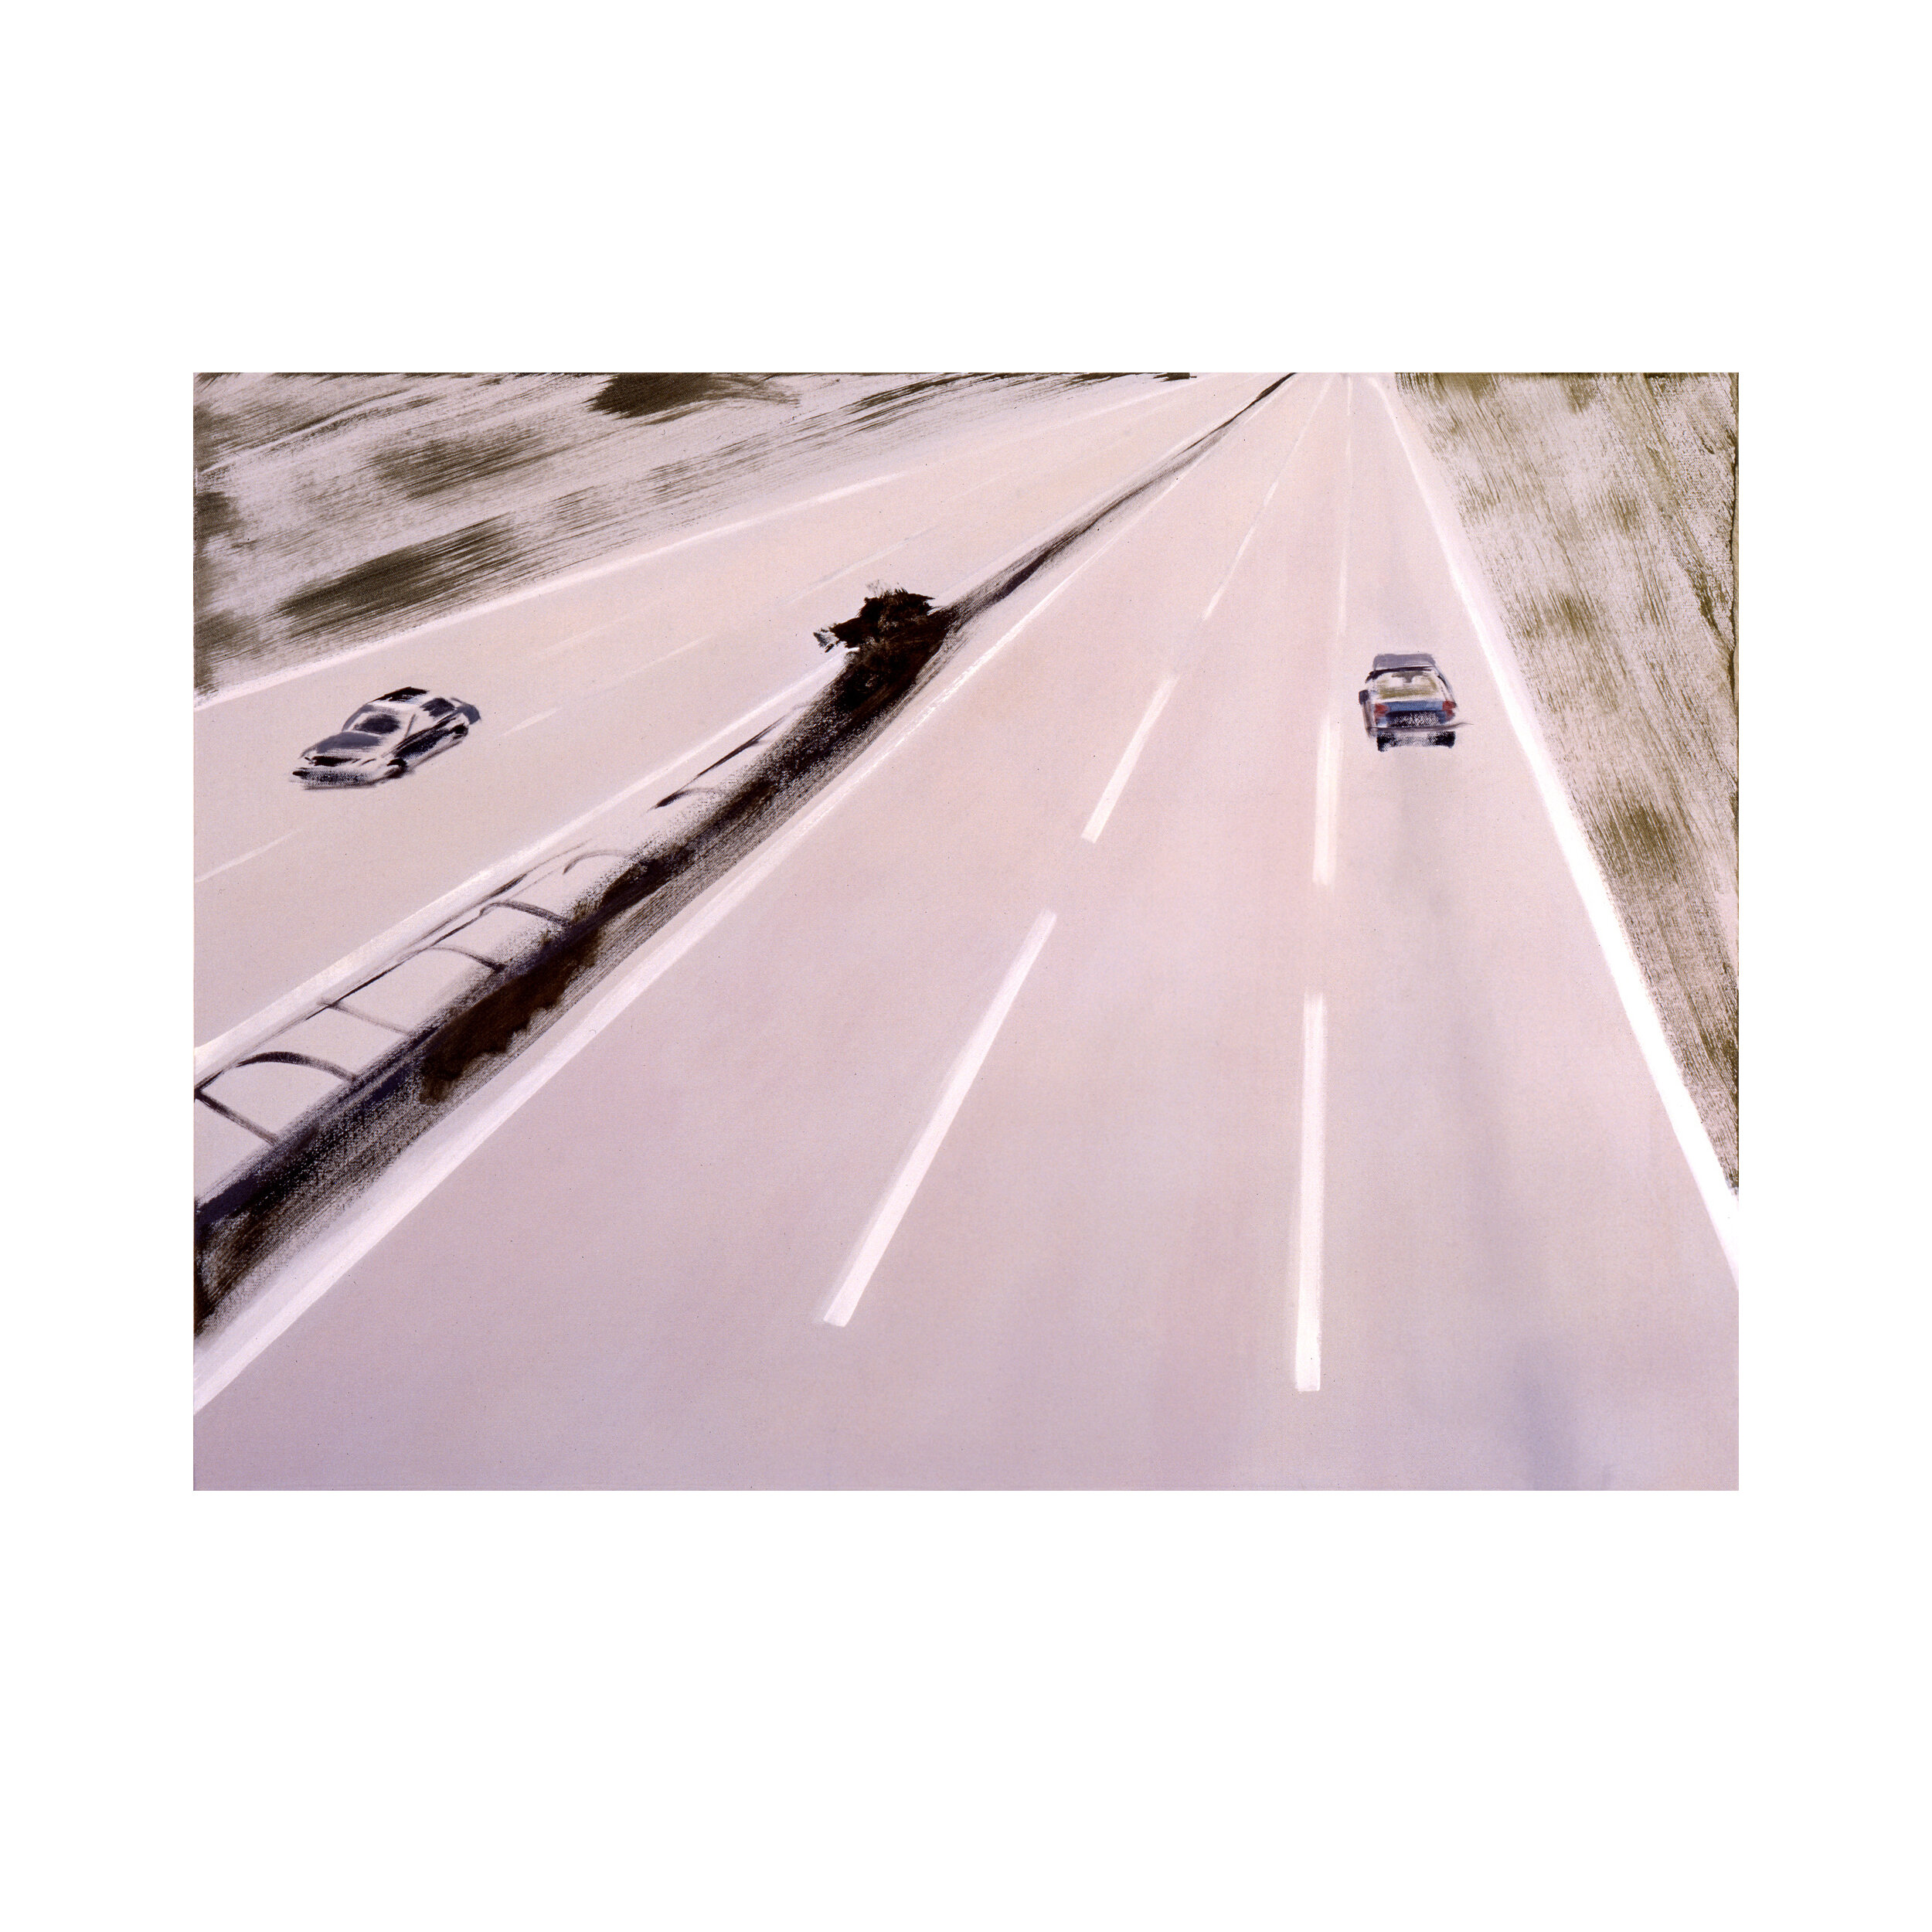  Autobahnautos alltäglich, 2003 100 x 125 cm Acryl auf Baumwolle Foto: W.Günzel 